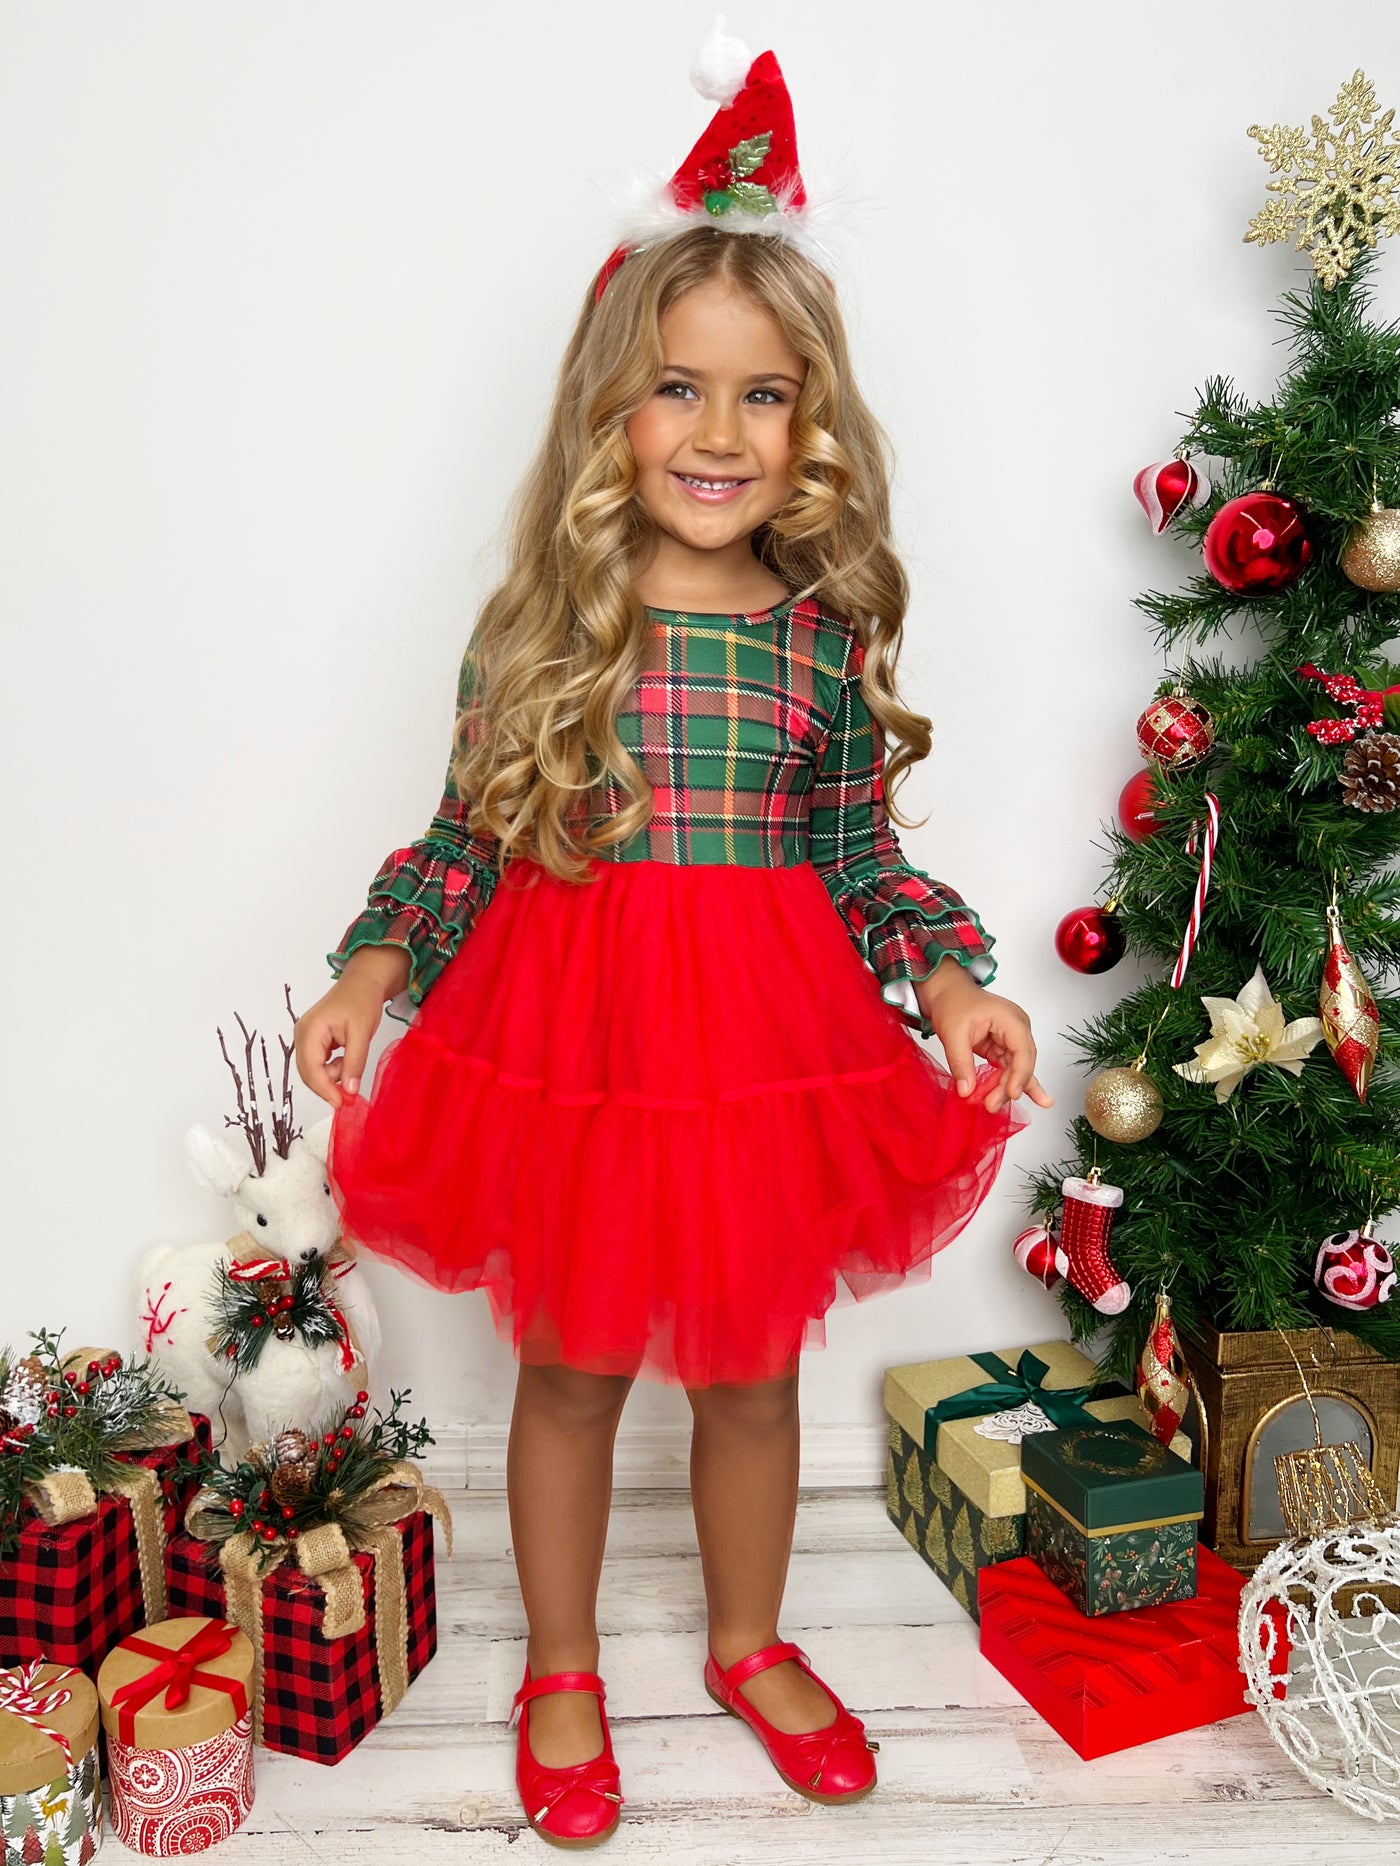 Mia Belle Girls Christmas Plaid Tutu Dress | Girls Winter Dresses